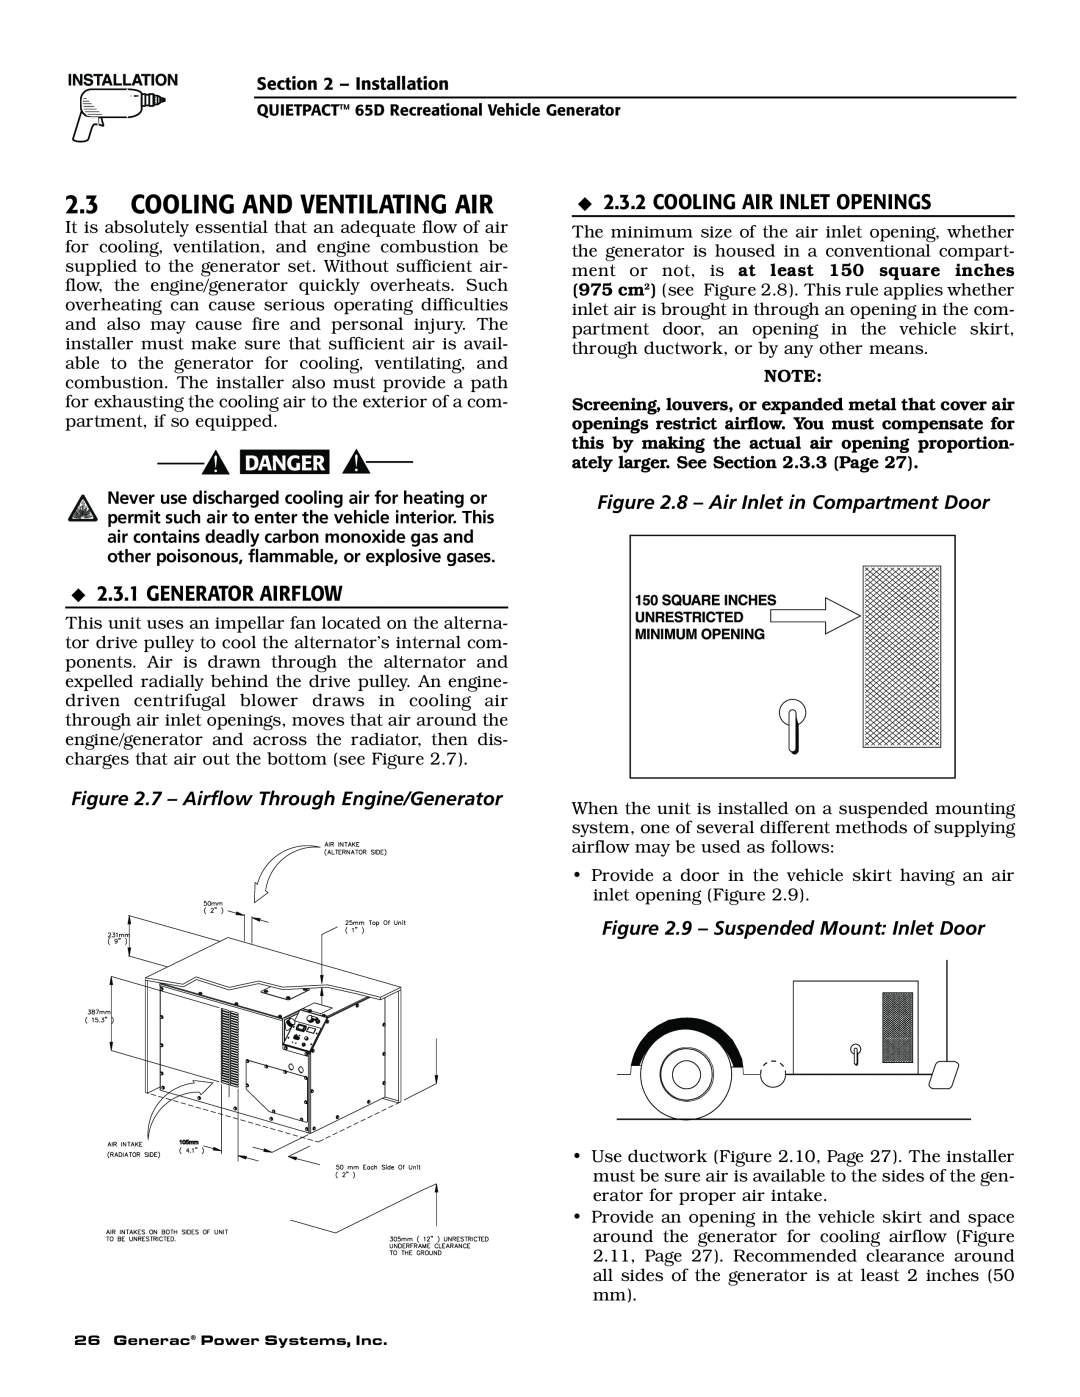 Generac 004614-1 owner manual Cooling And Ventilating Air, Cooling Air Inlet Openings, Generator Airflow 